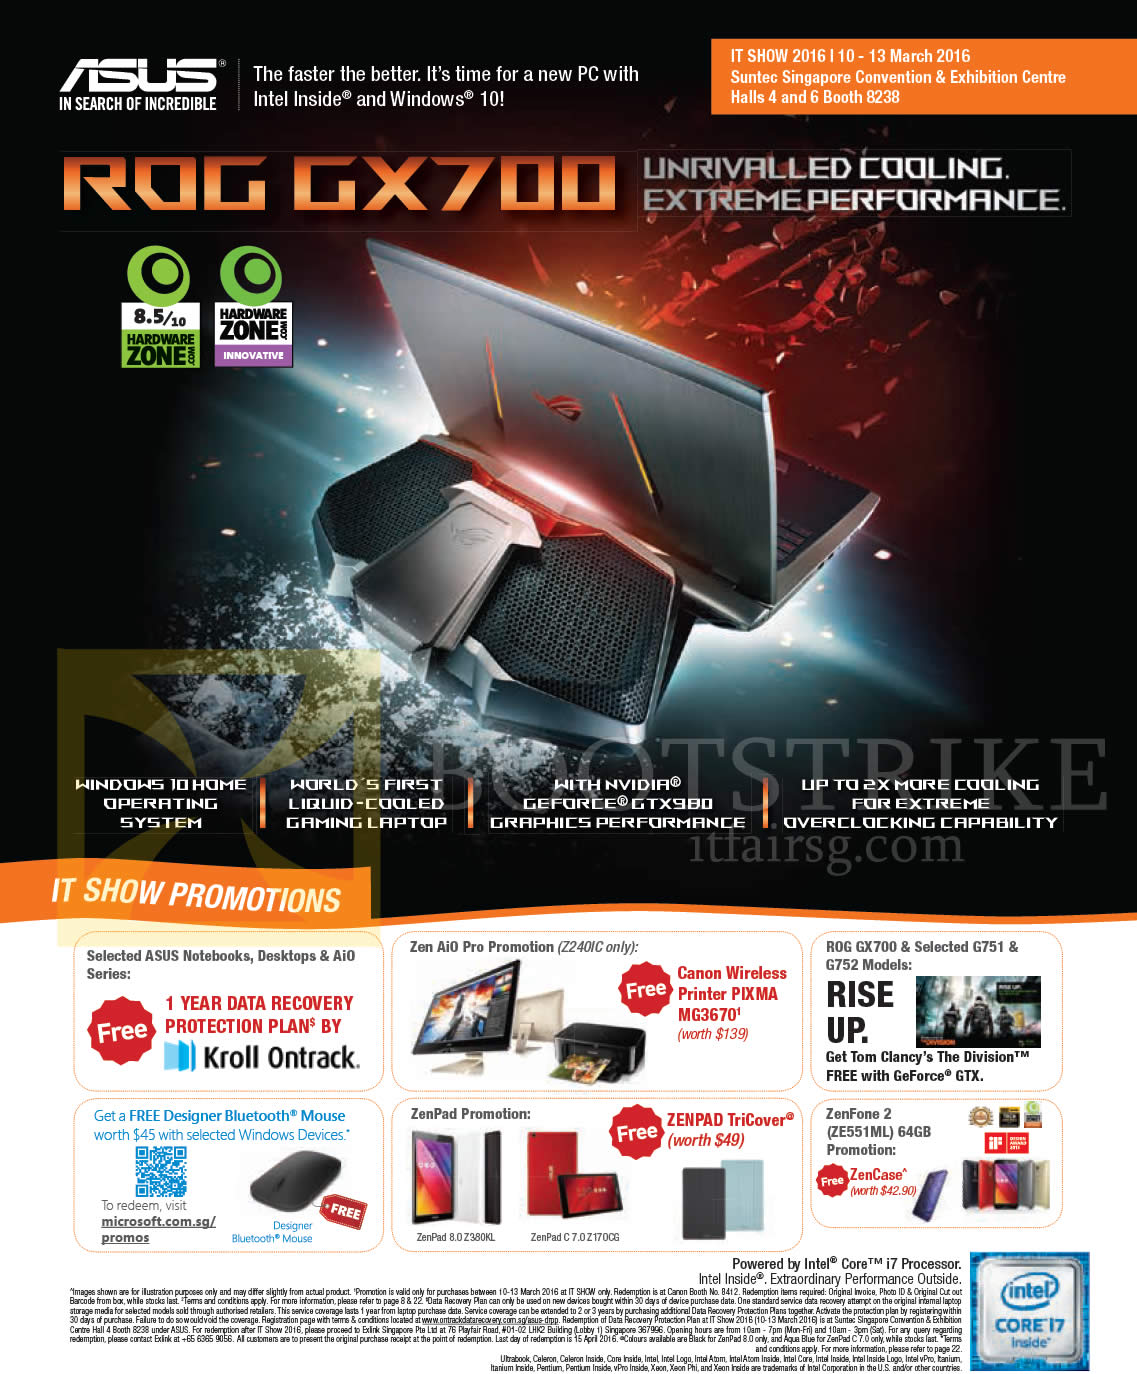 IT SHOW 2016 price list image brochure of ASUS Highlights, Notebook ROG GX700, Kroll Ontrack